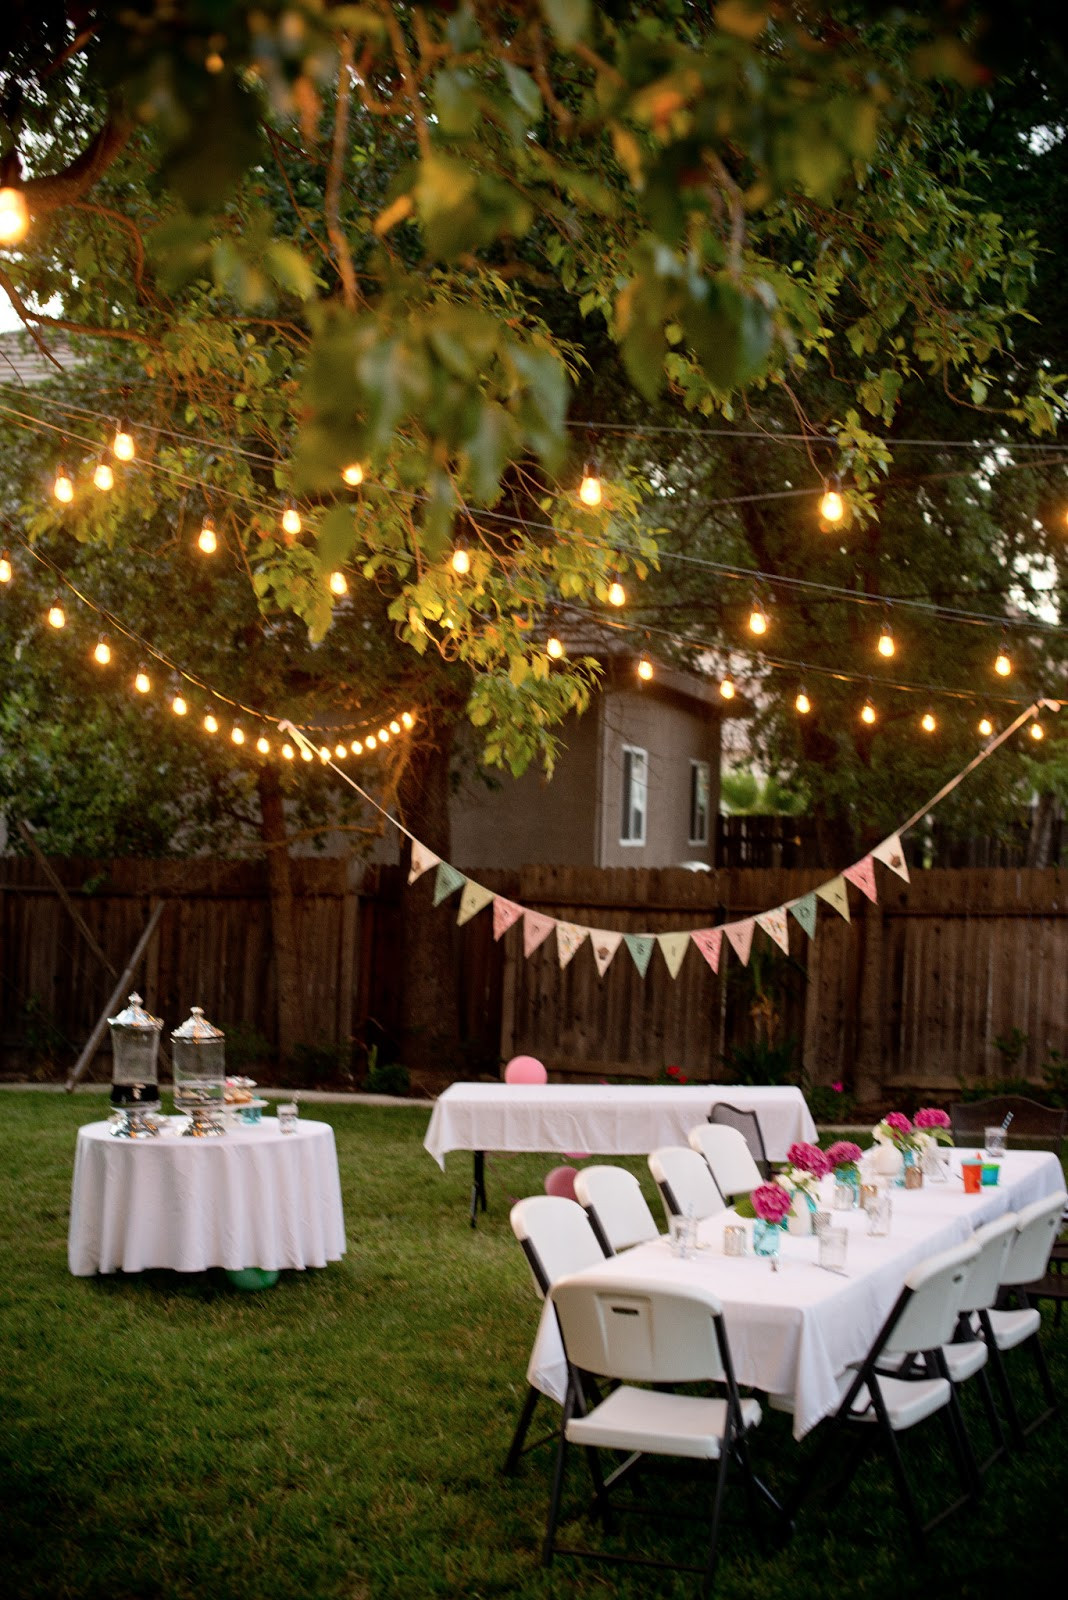 Backyard Party Ideas Lighting
 Domestic Fashionista Backyard Birthday Fun Pink